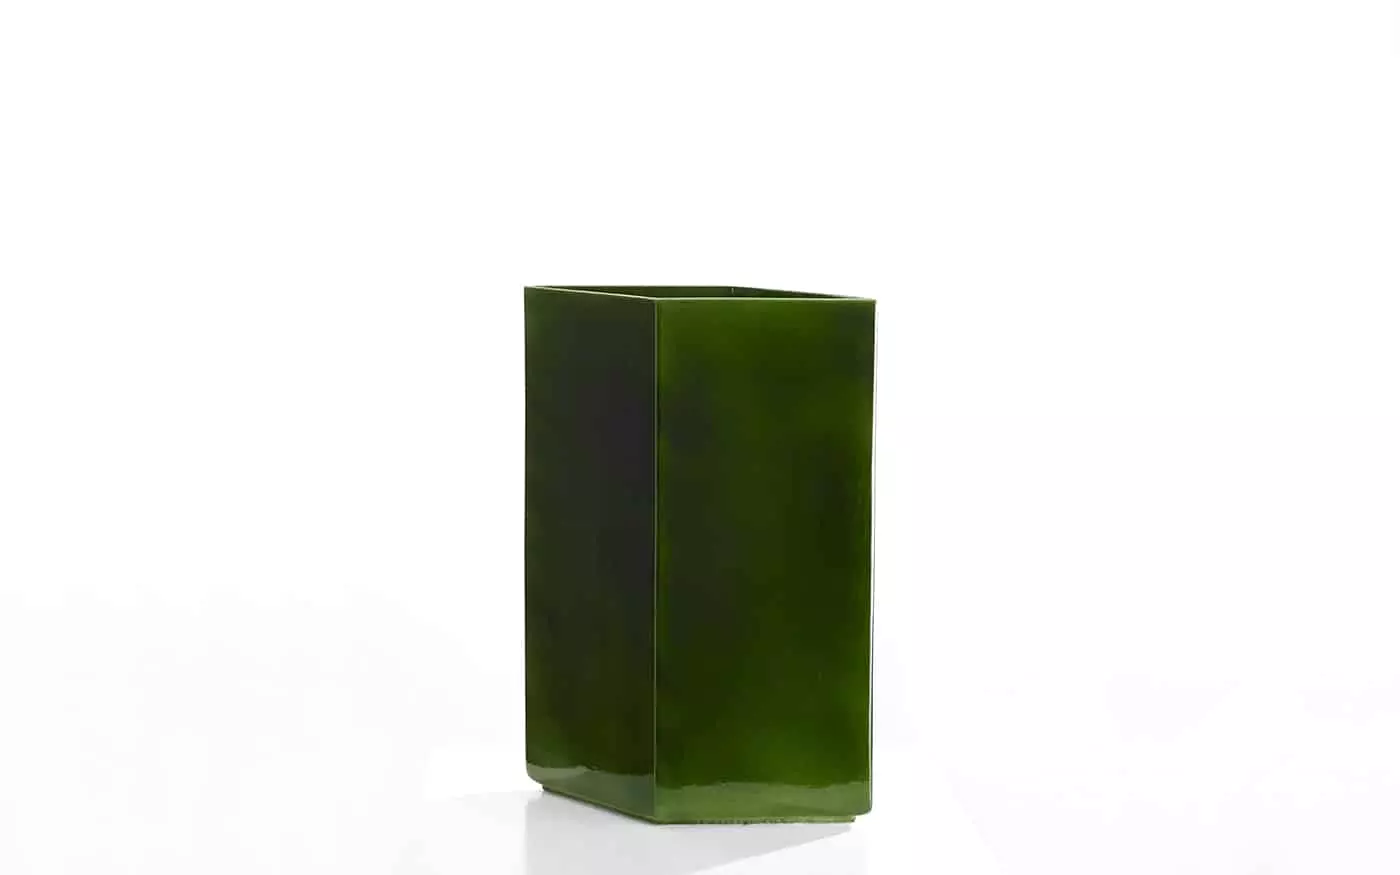 Vase Losange 67 green - Ronan & Erwan Bouroullec - Shelf - Galerie kreo